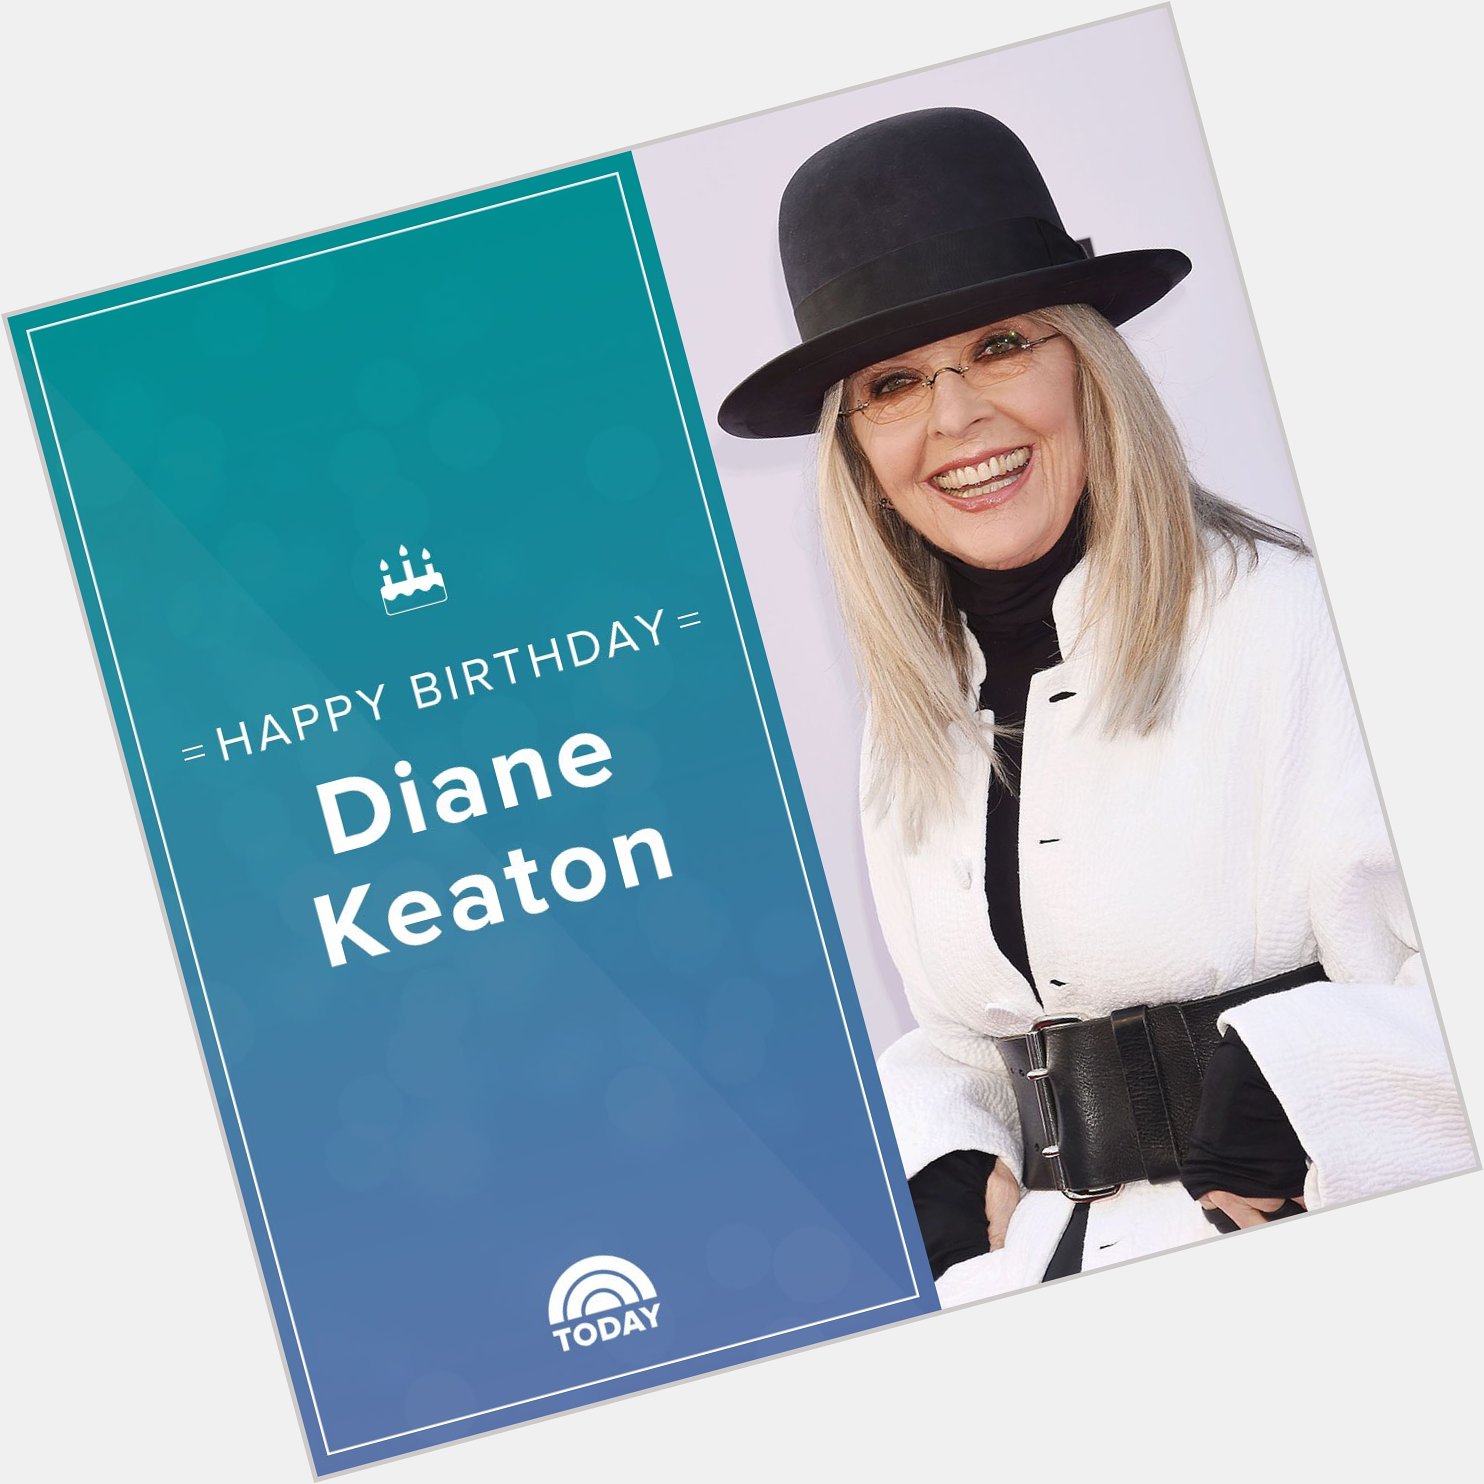 Happy birthday, Diane Keaton!   